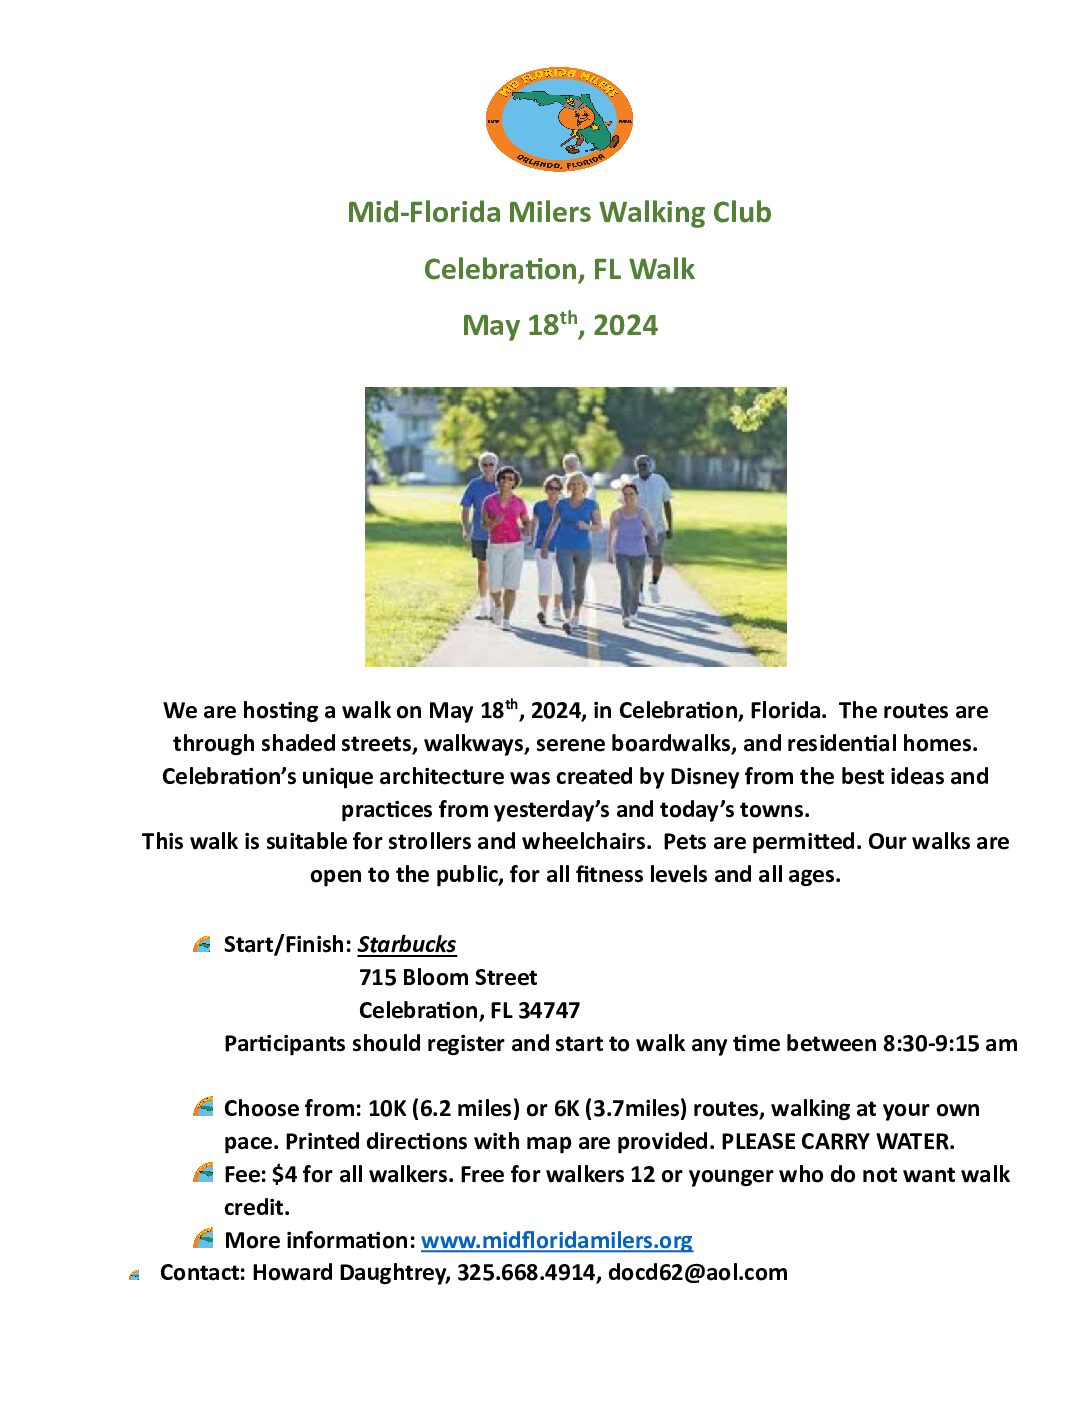 Mid-Florida Milers Walking Club @ Celebration